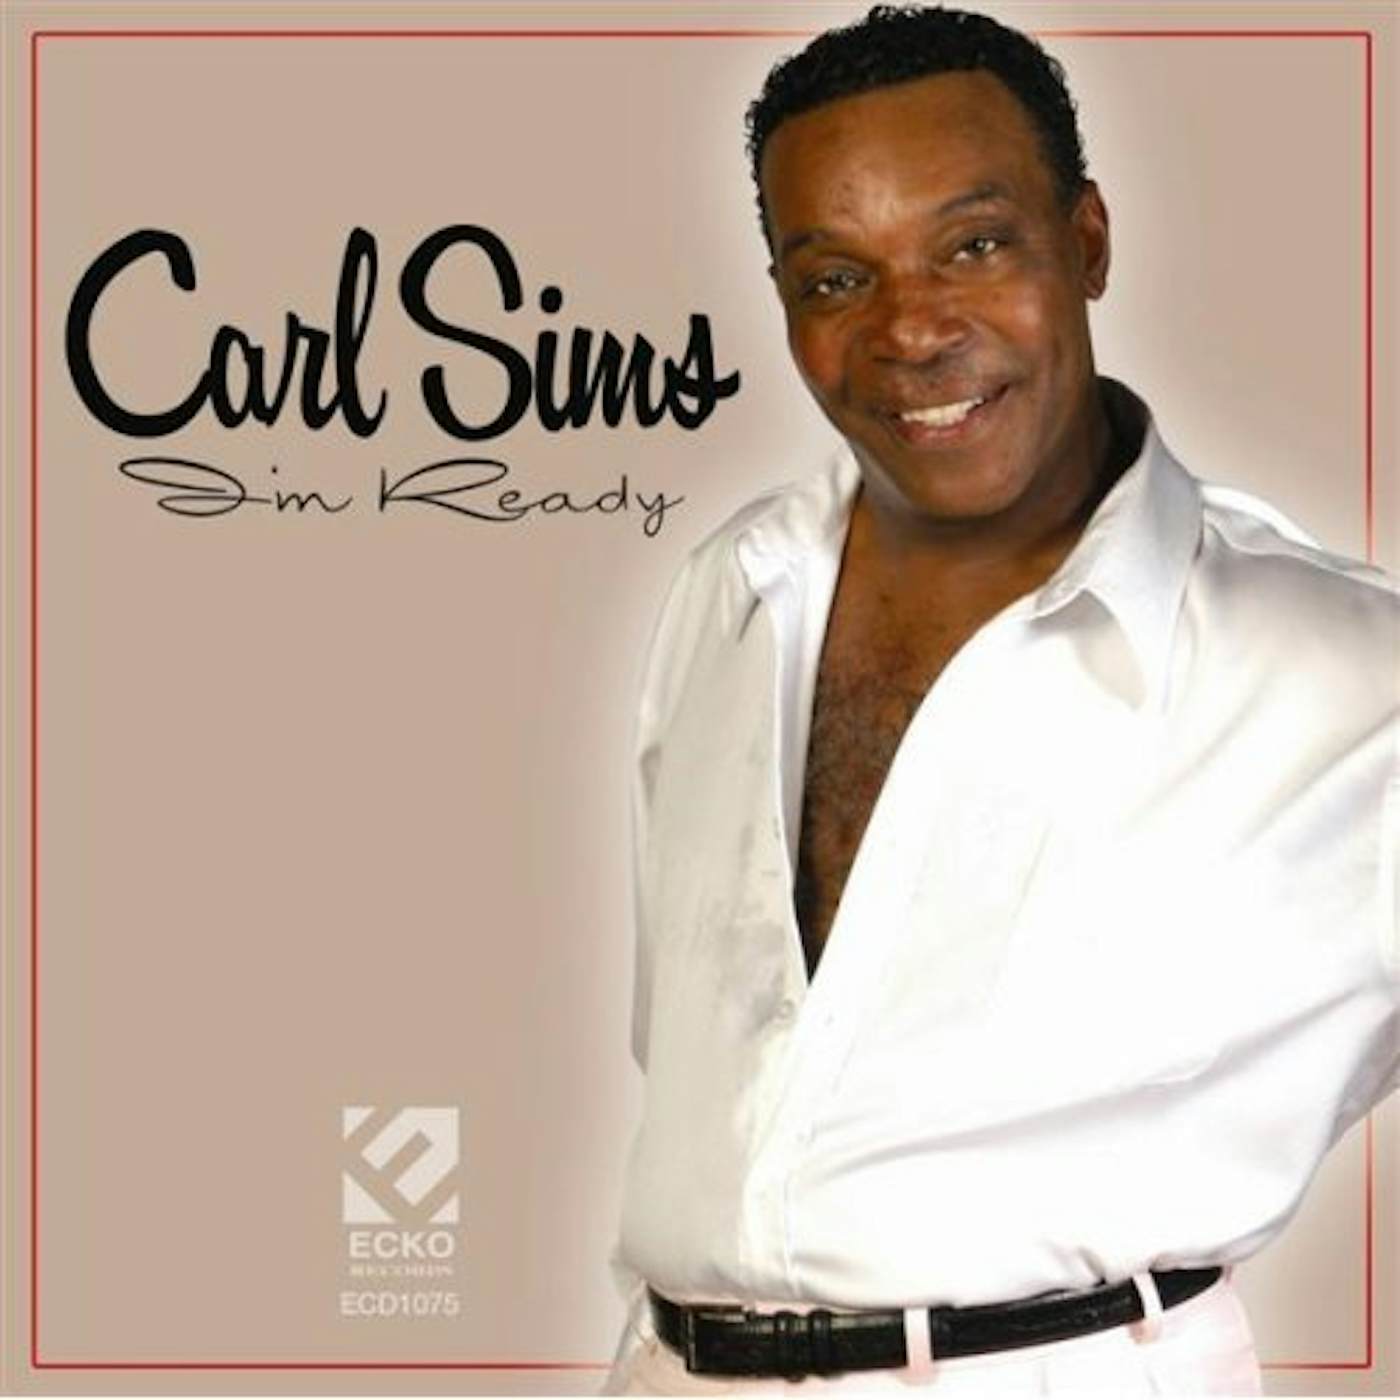 Carl Sims I'M READY CD